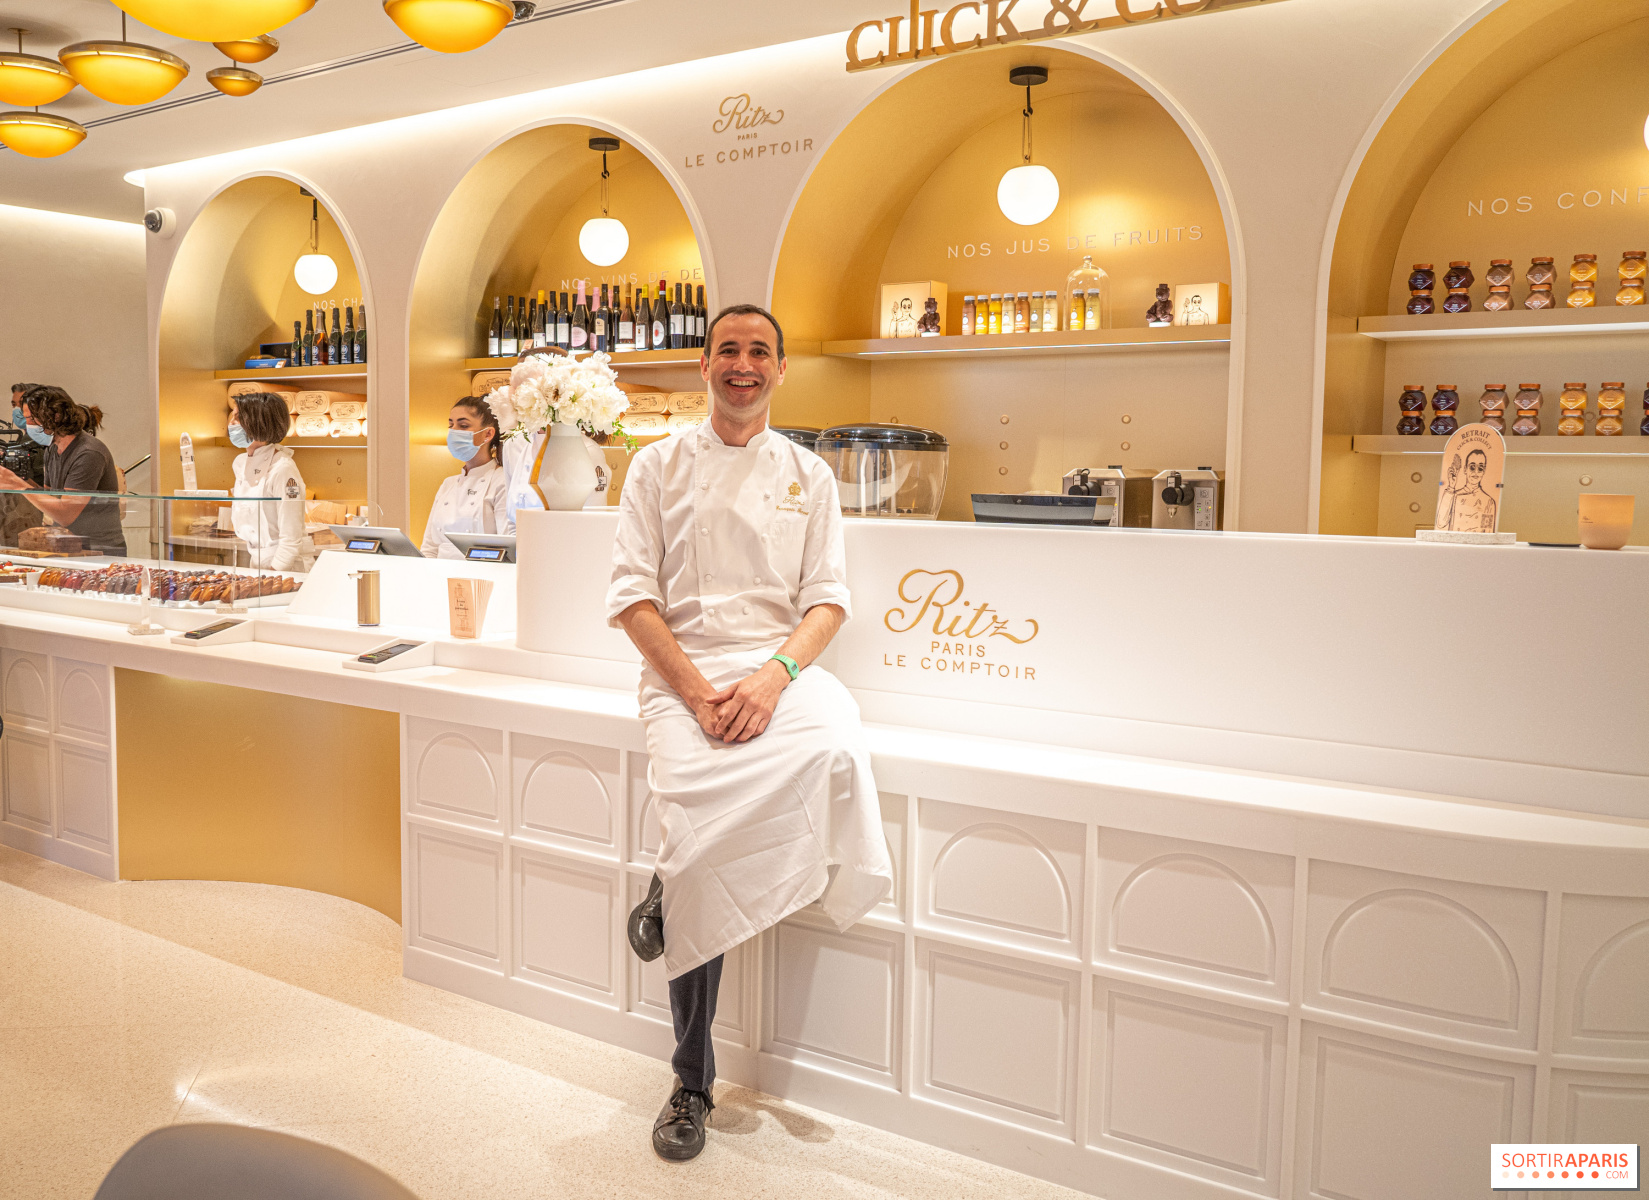 Restaurants At The Ritz Paris